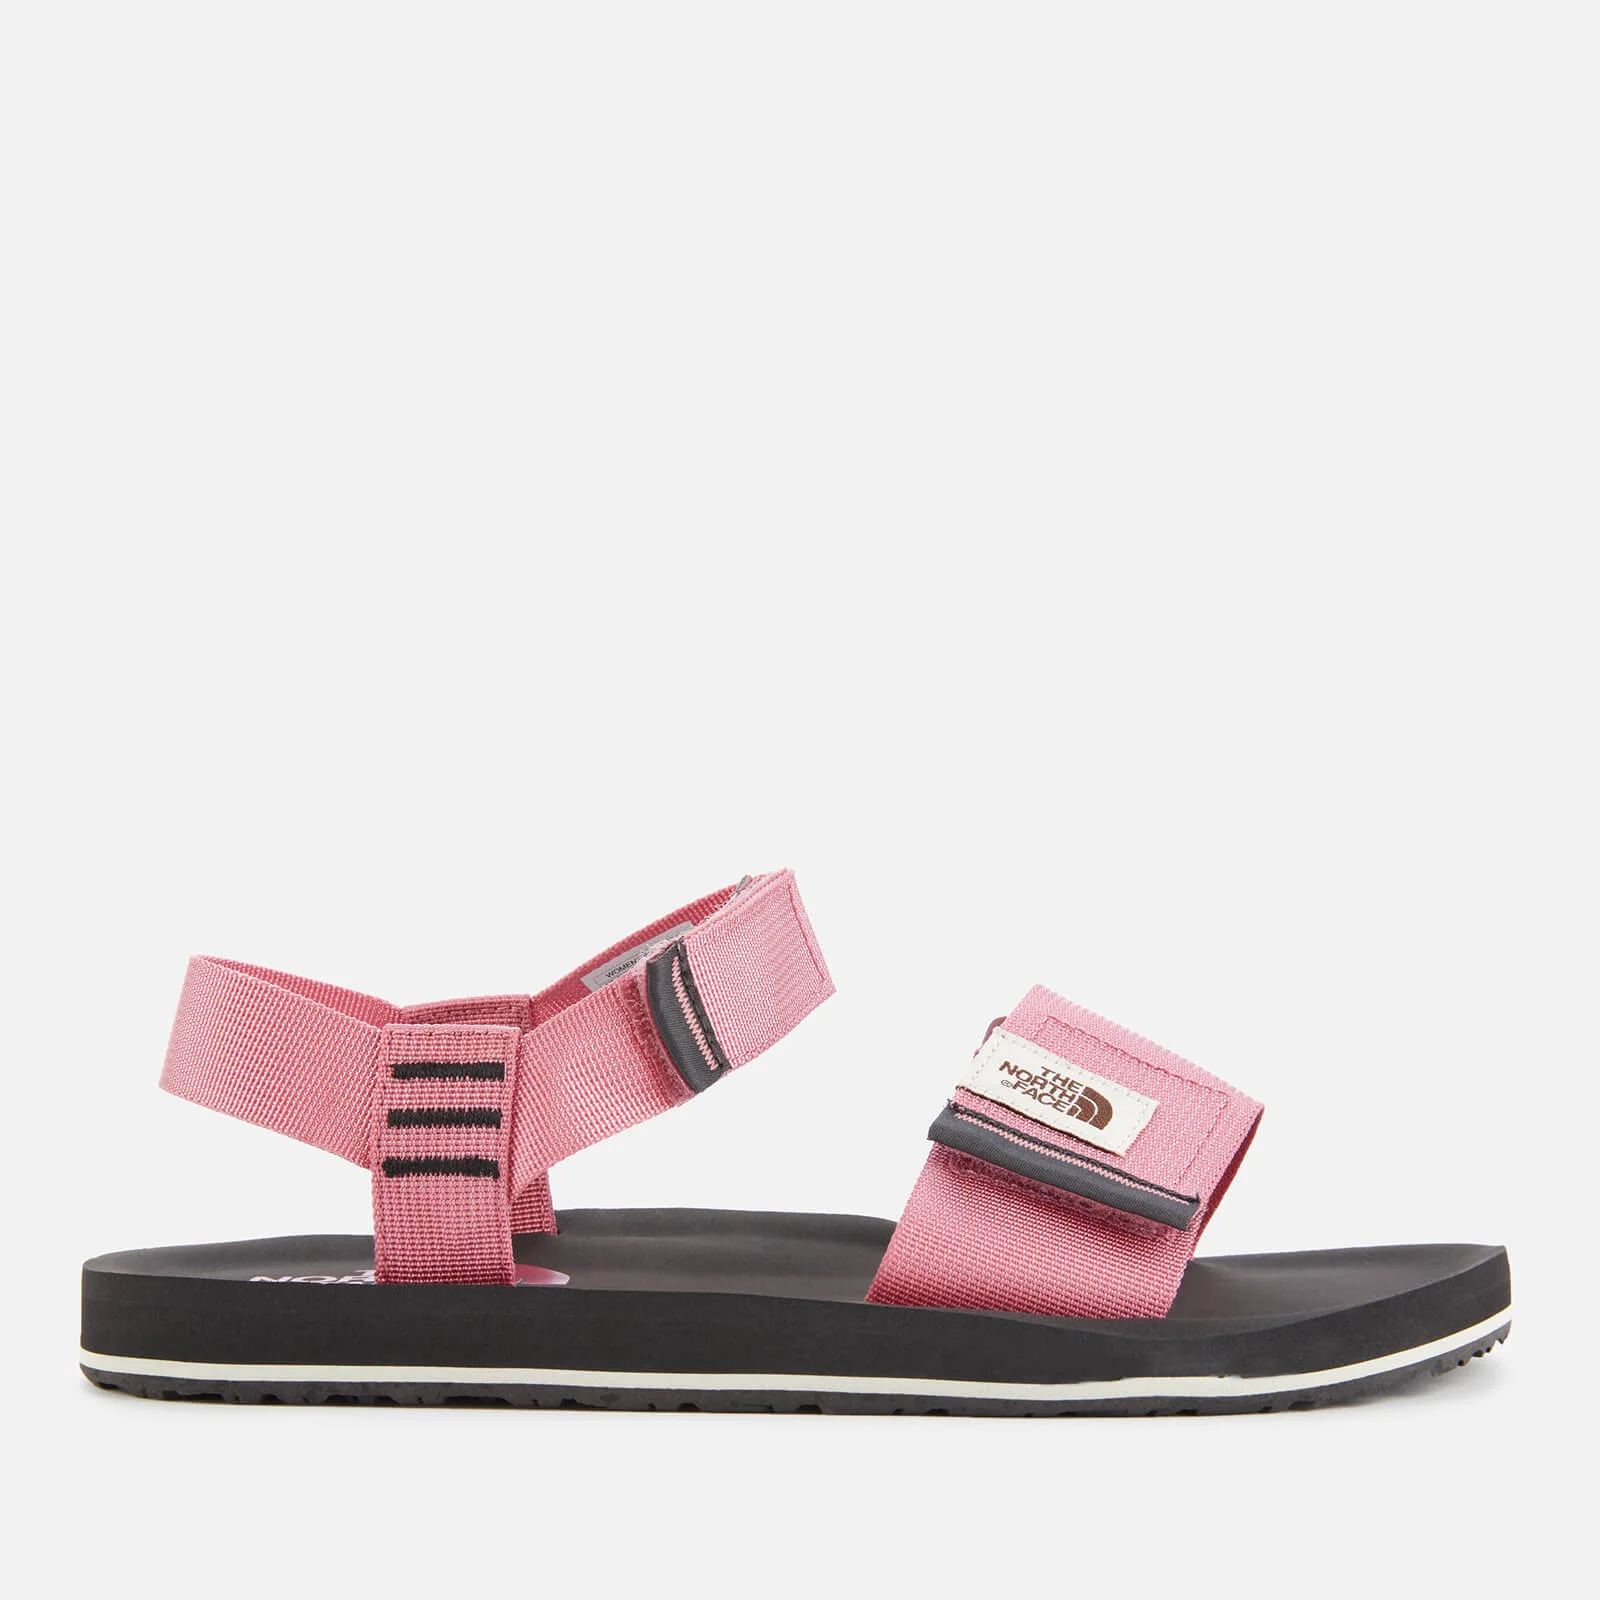 The North Face Women's Skeena Sandals - Black/Pink Image 1